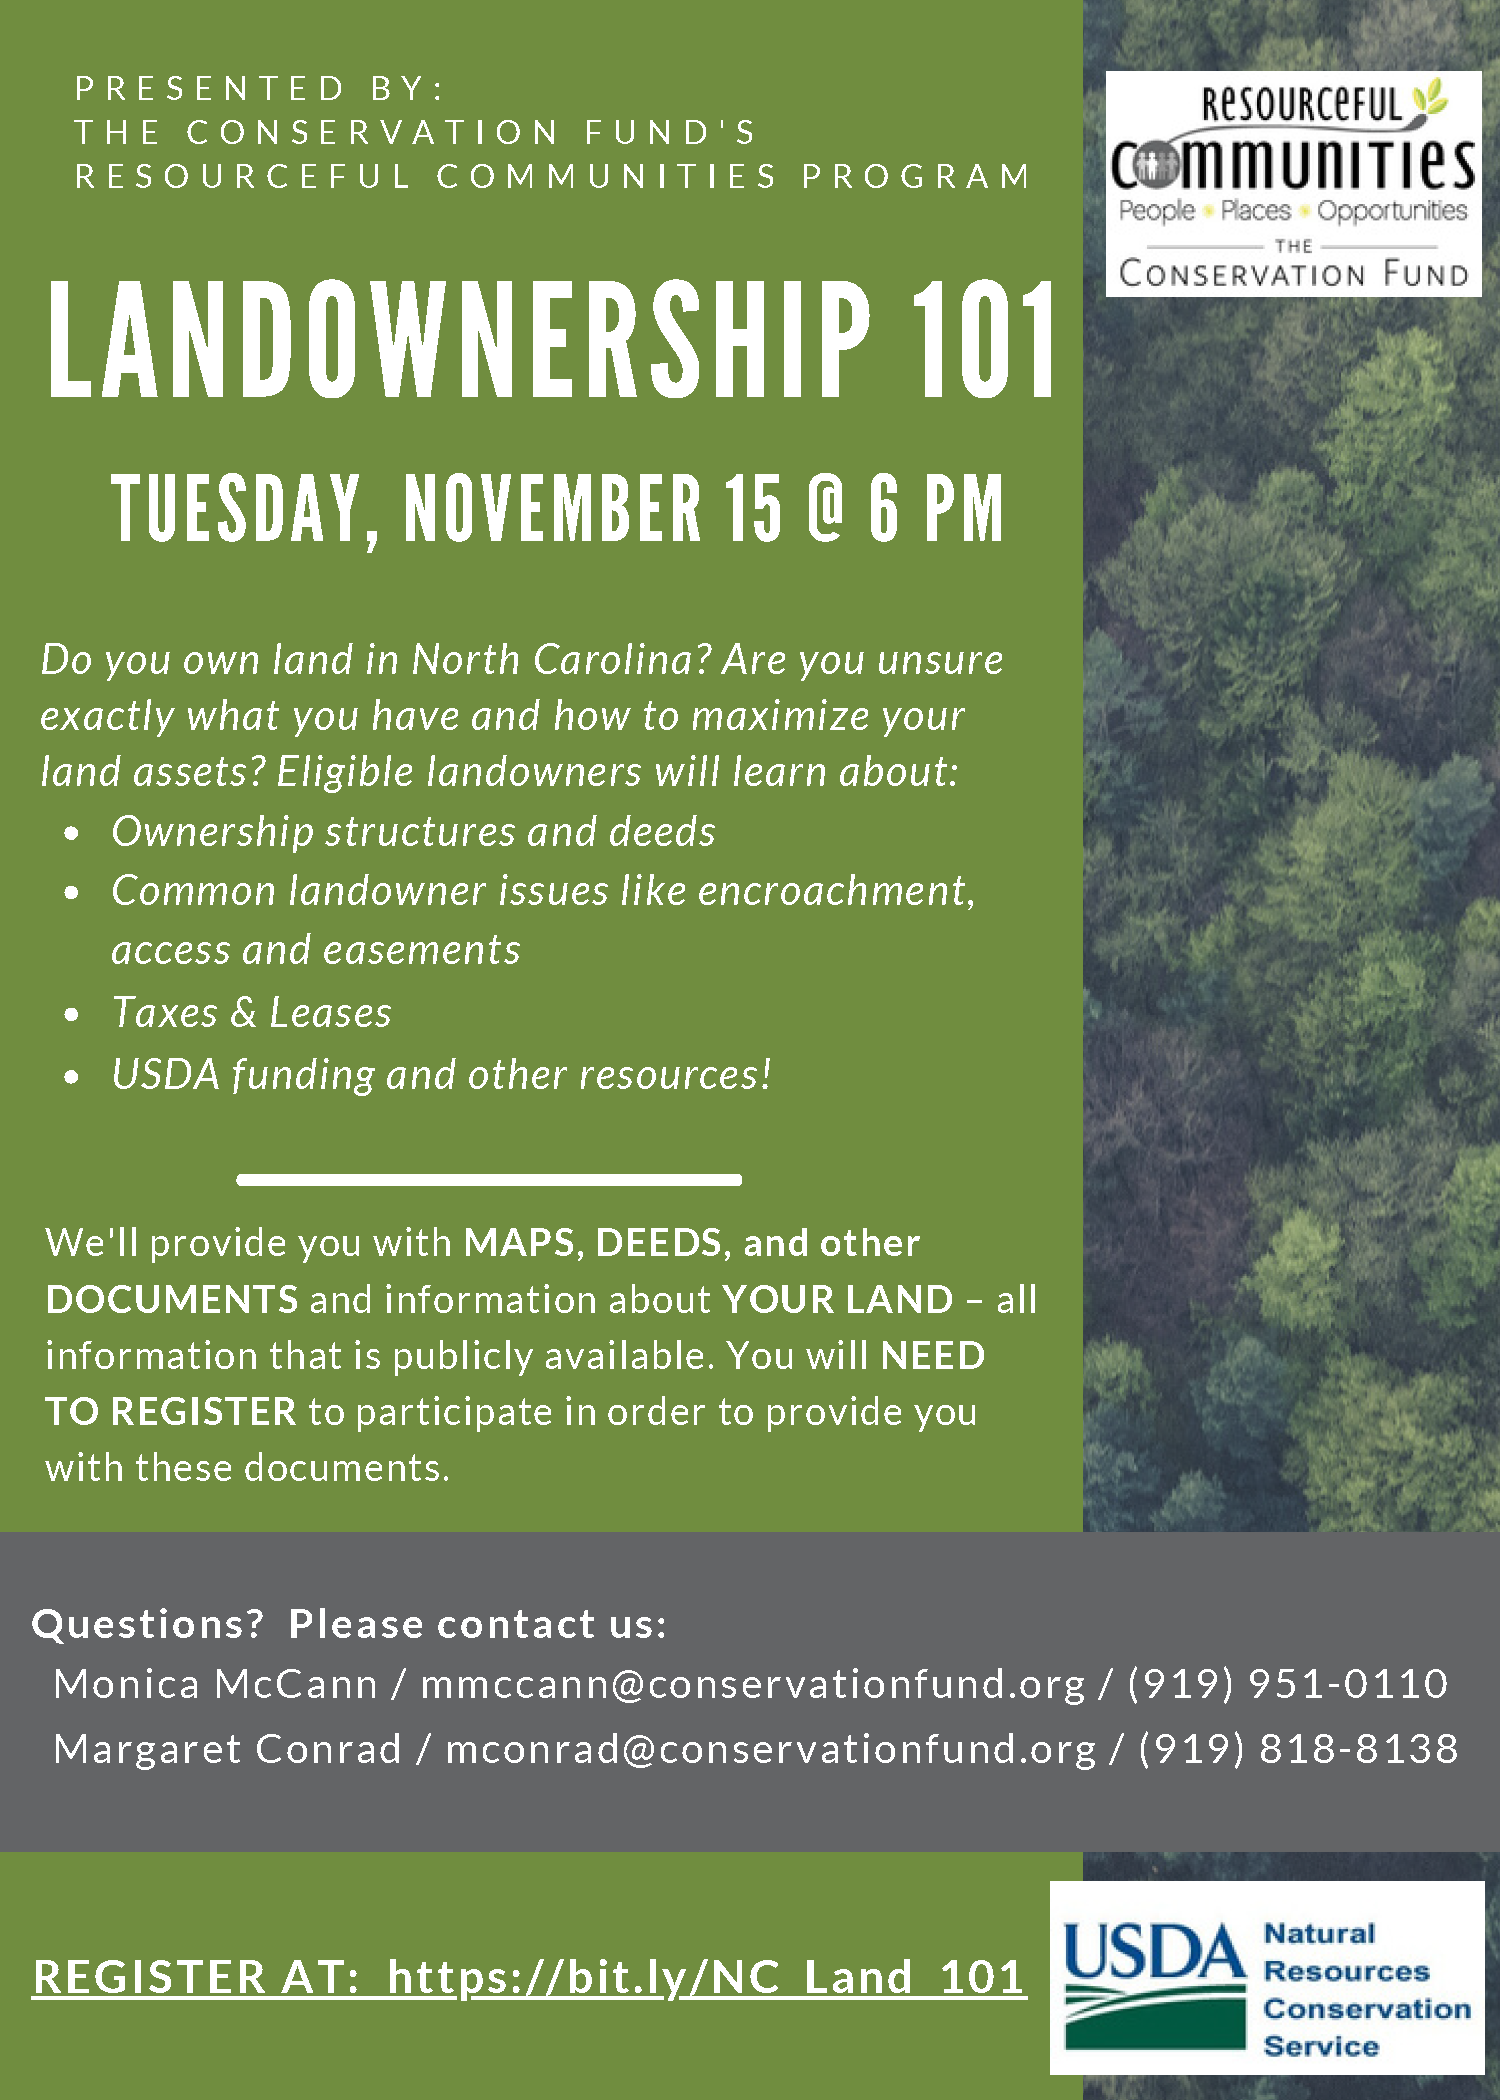 Landownership 101 flyer, registration info